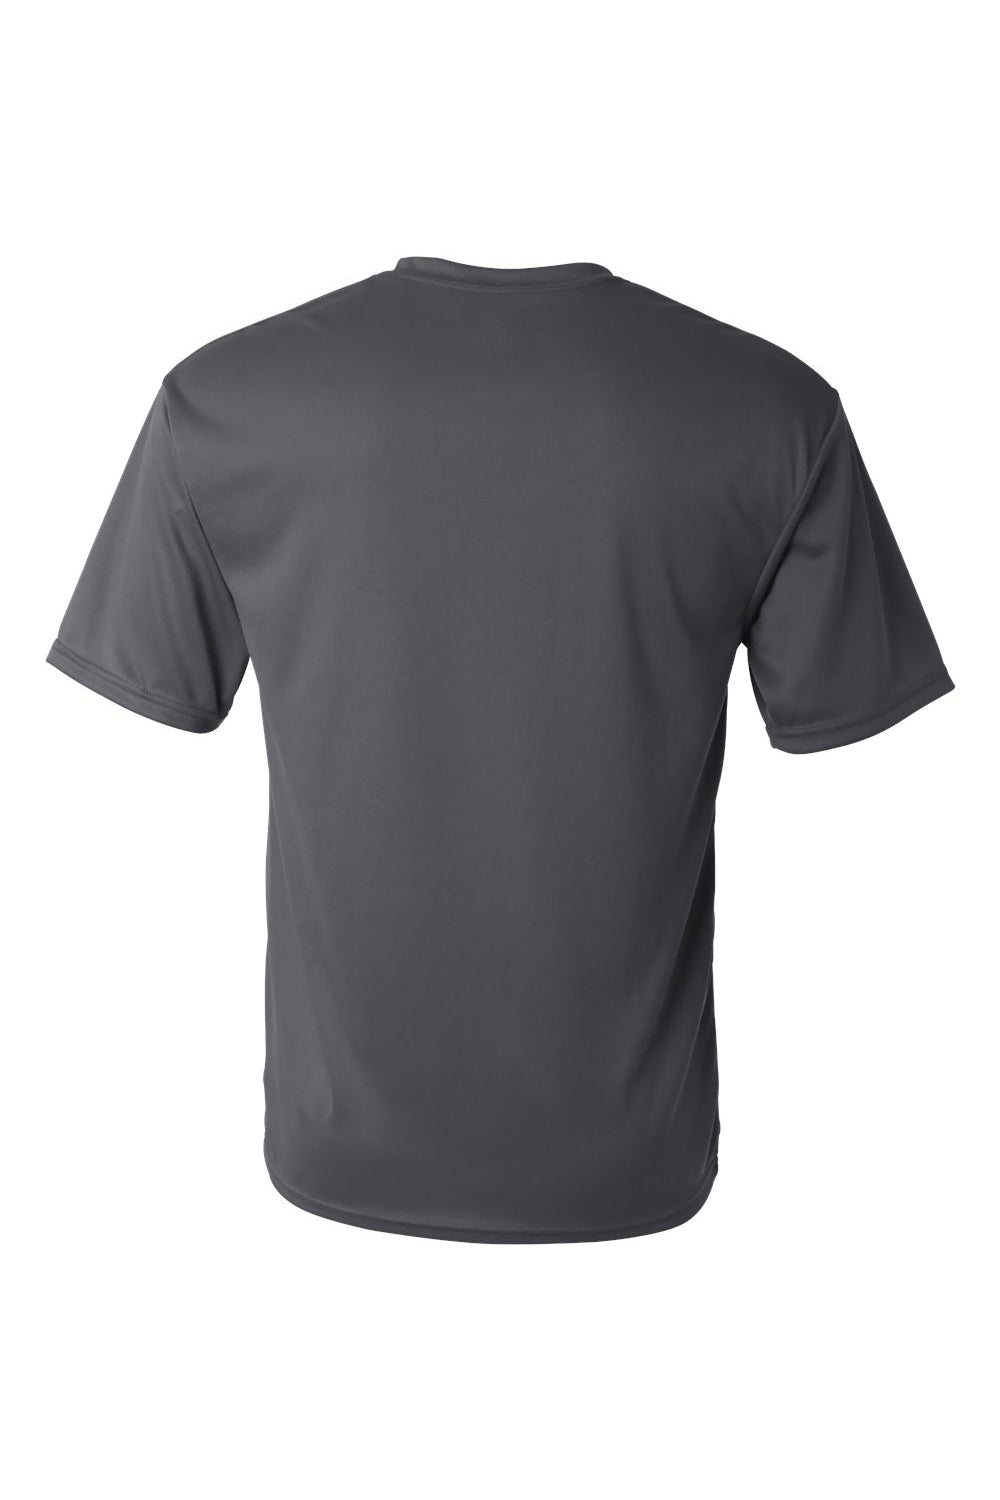 C2 Sport 5100 Mens Performance Moisture Wicking Short Sleeve Crewneck T-Shirt Graphite Grey Flat Back